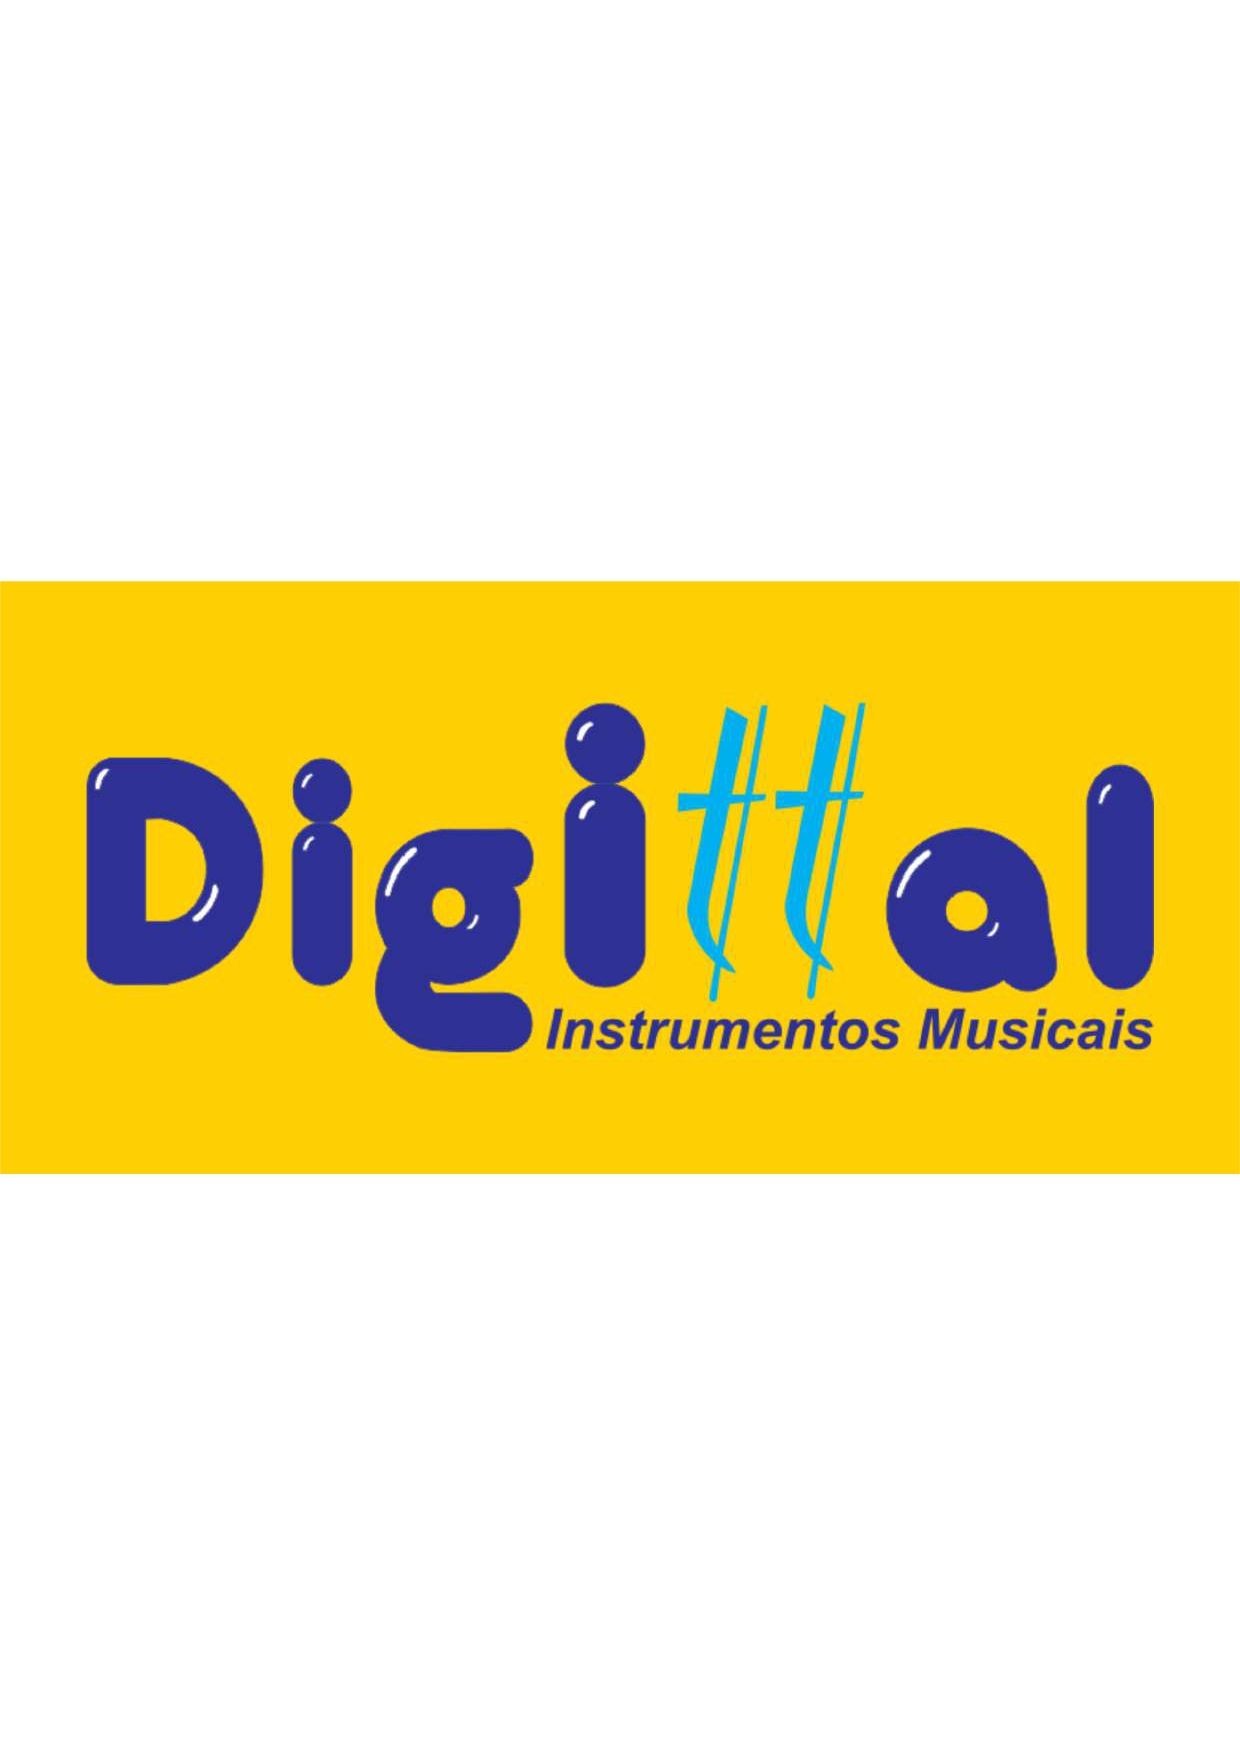 Logotipo DIGITTAL INSTRUMENTOS MUSICAIS